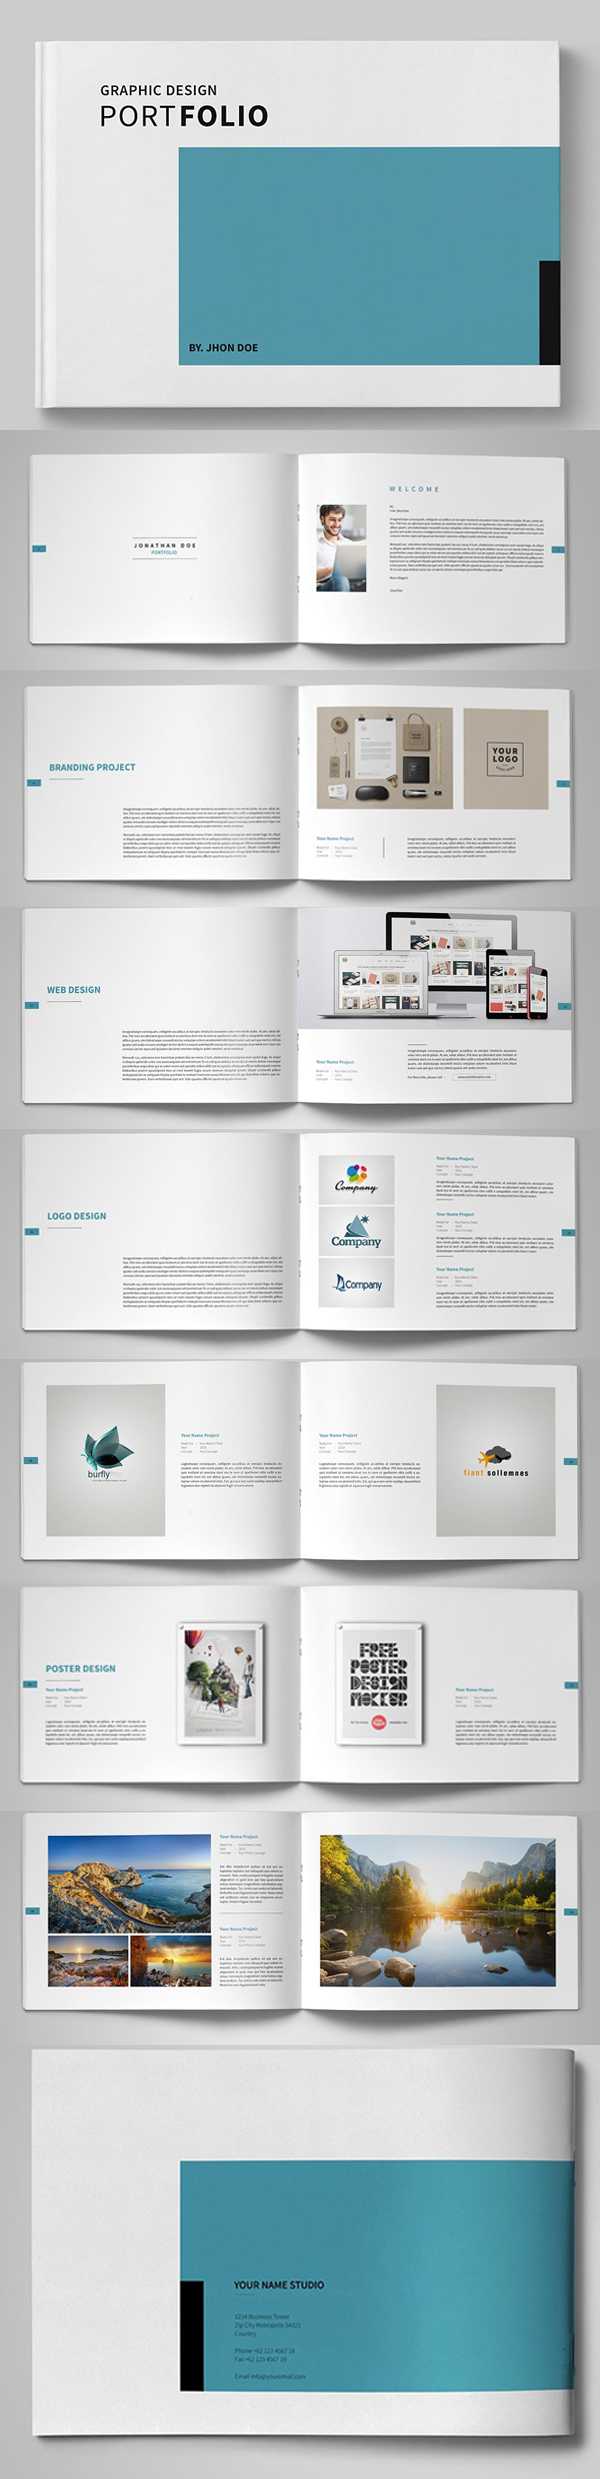 20 New Professional Catalog Brochure Templates | Design Pertaining To Brochure Template Indesign Free Download